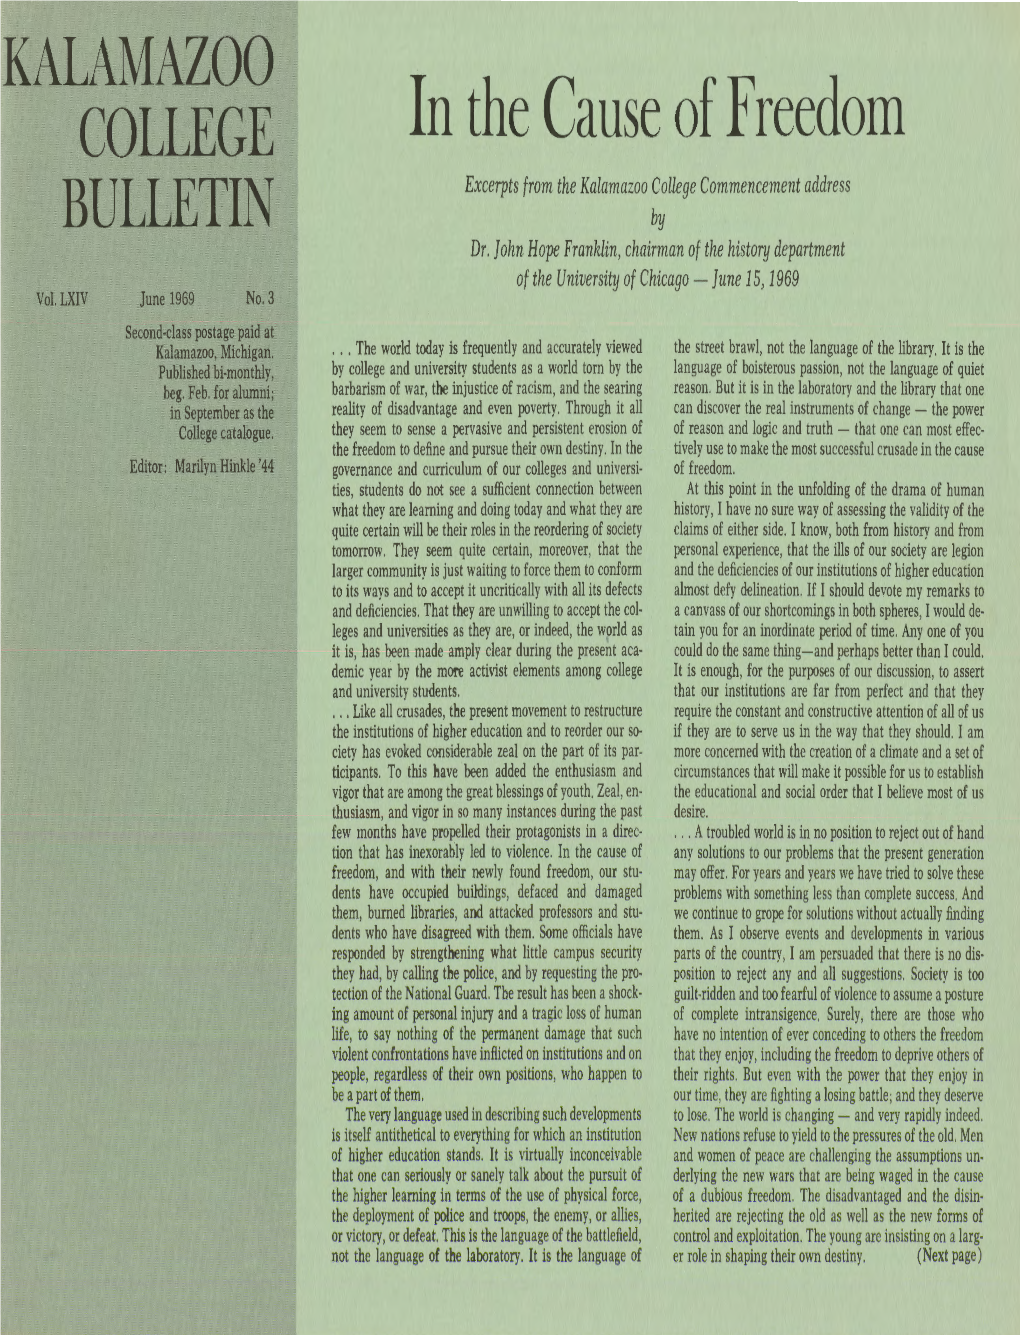 Kalamazoo College Bulletin (Vol. LXIV, June 1969, No. 3)